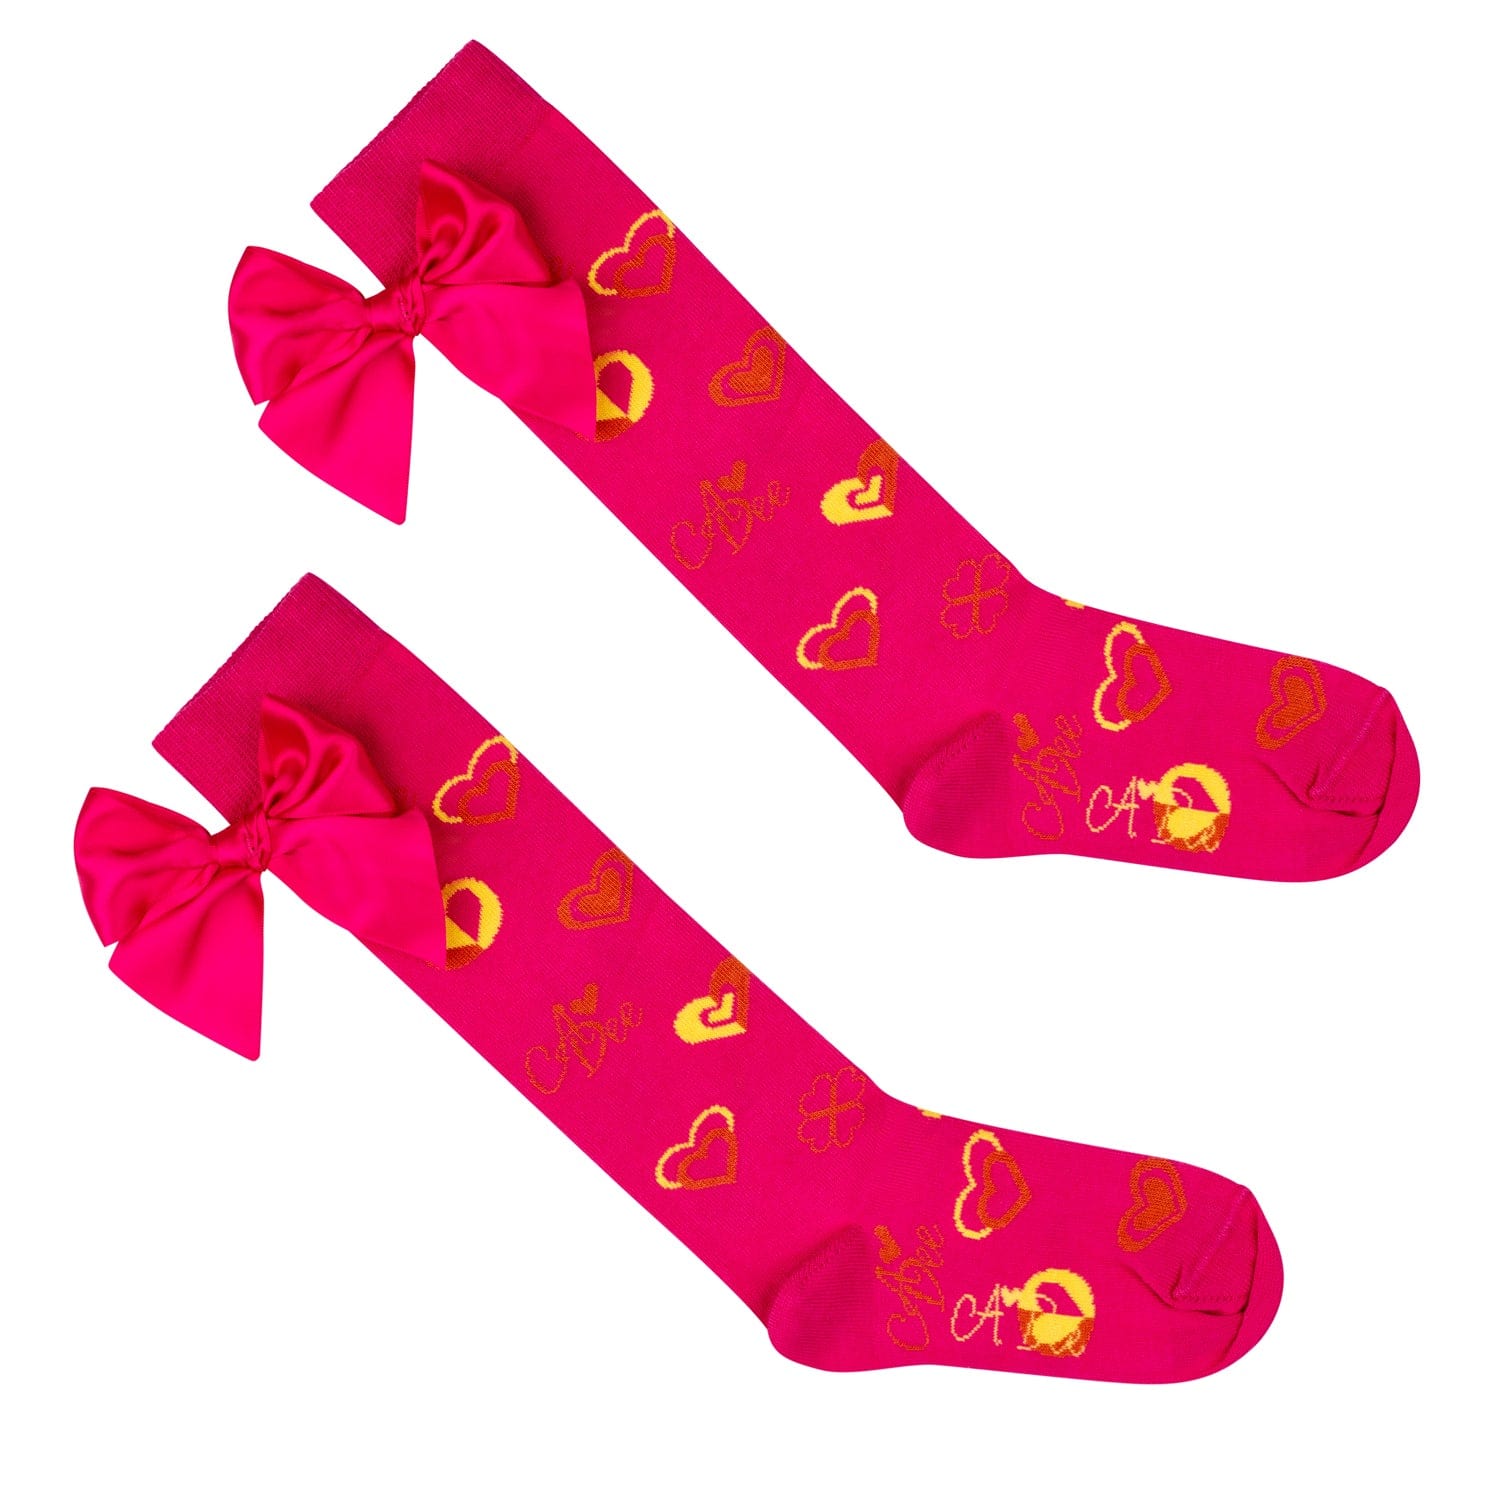 A DEE - Mairi Bold Hearts Colour Block Knee High Socks  - Hot Pink